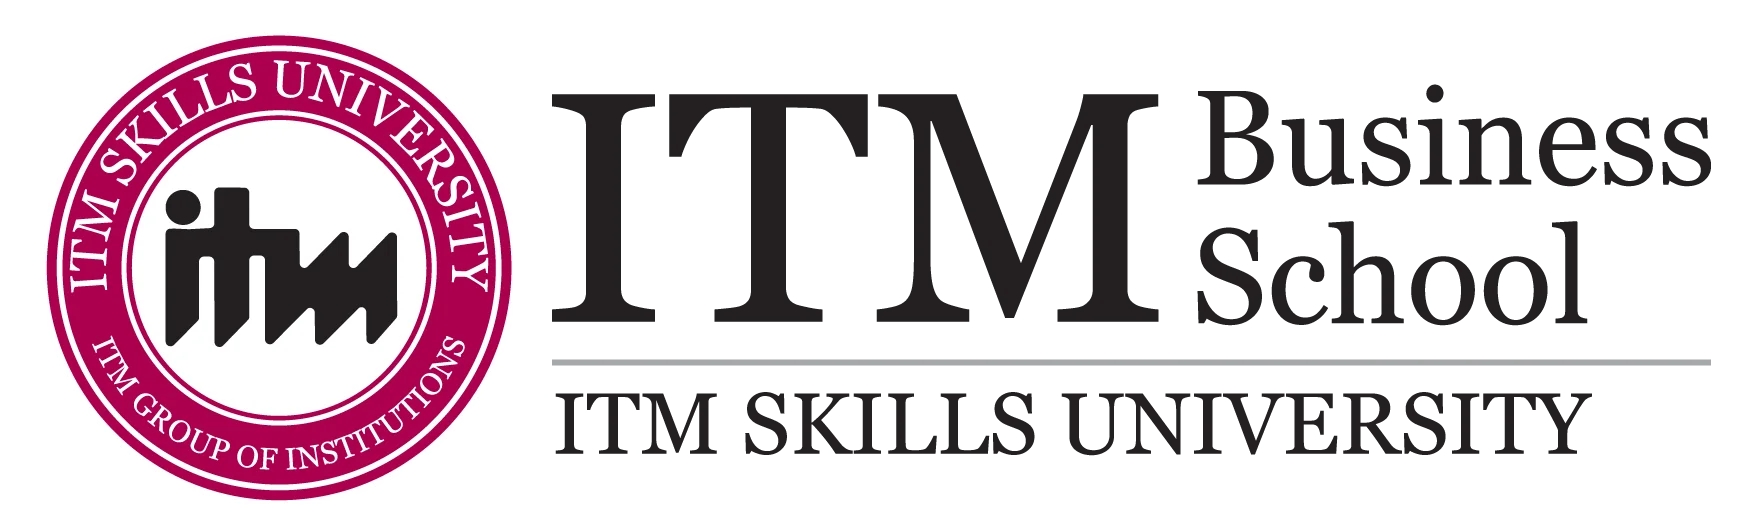 ITM-B-School-Logo